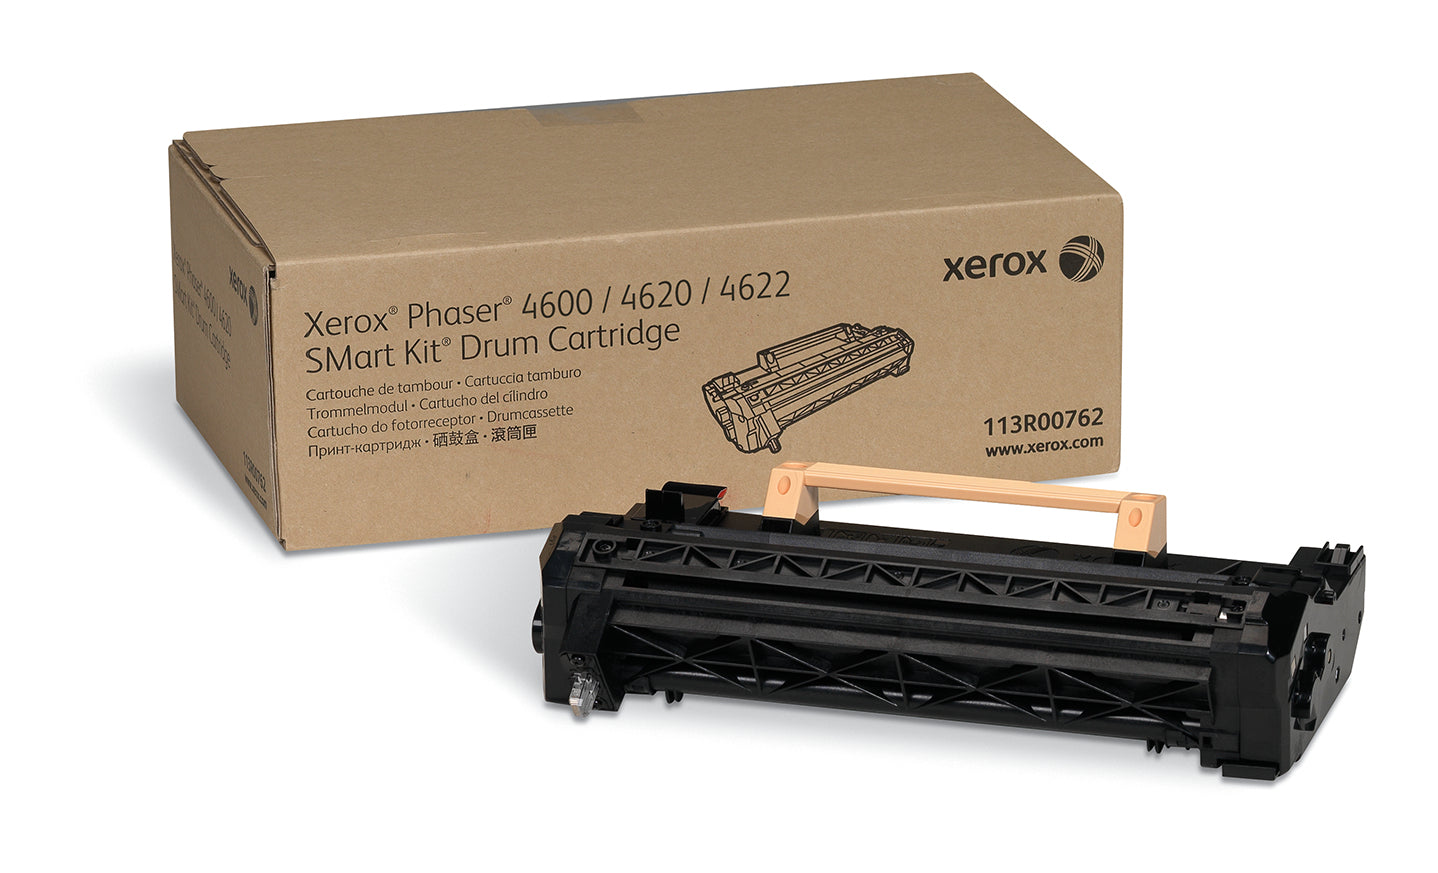 XEROX SUPP A3 MON TAMBOR PHASER 4600/4620/4622 SUPL 80.000 IMPRESIONES